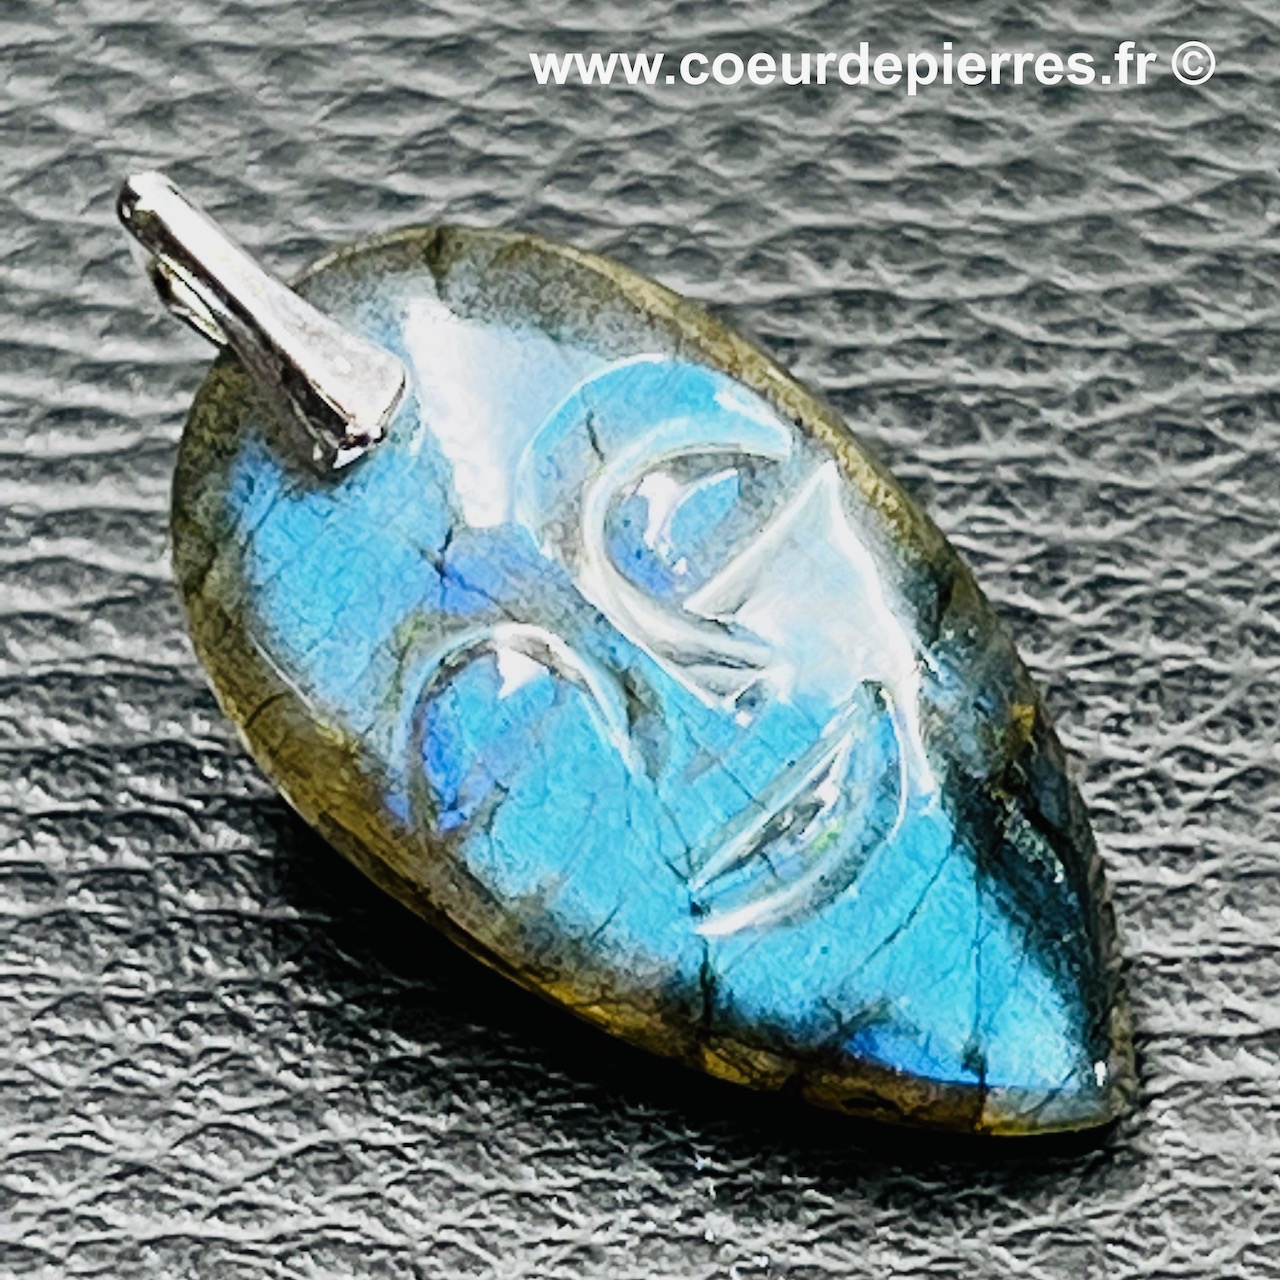 Pendentif labradorite bleu lagon « sculpté » (réf lbl15)